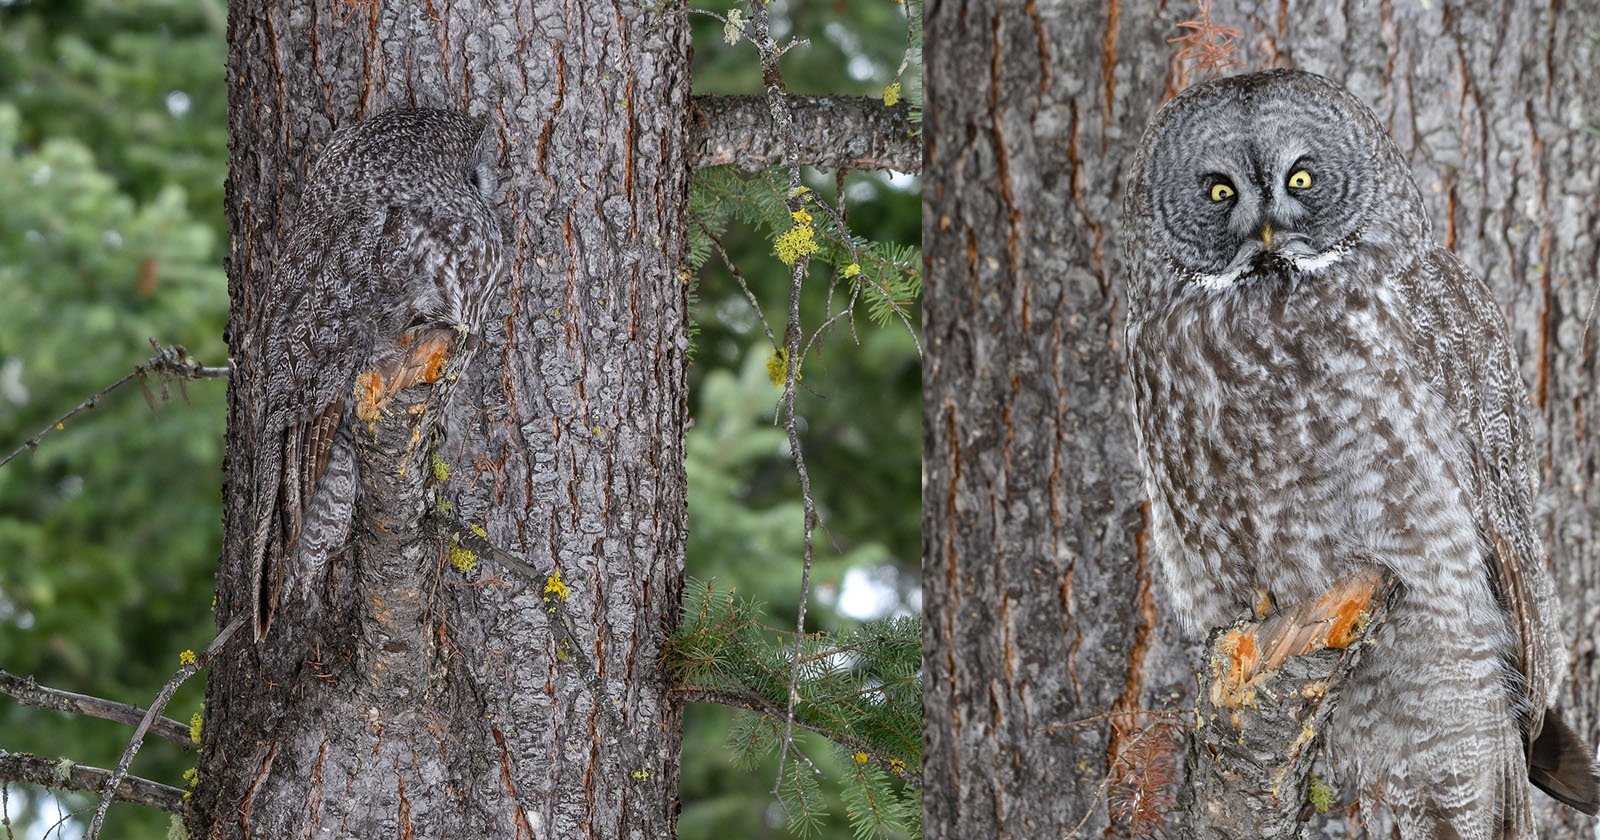 Un fotógrafo descubre a un búho mimetizado con la corteza de un árbol